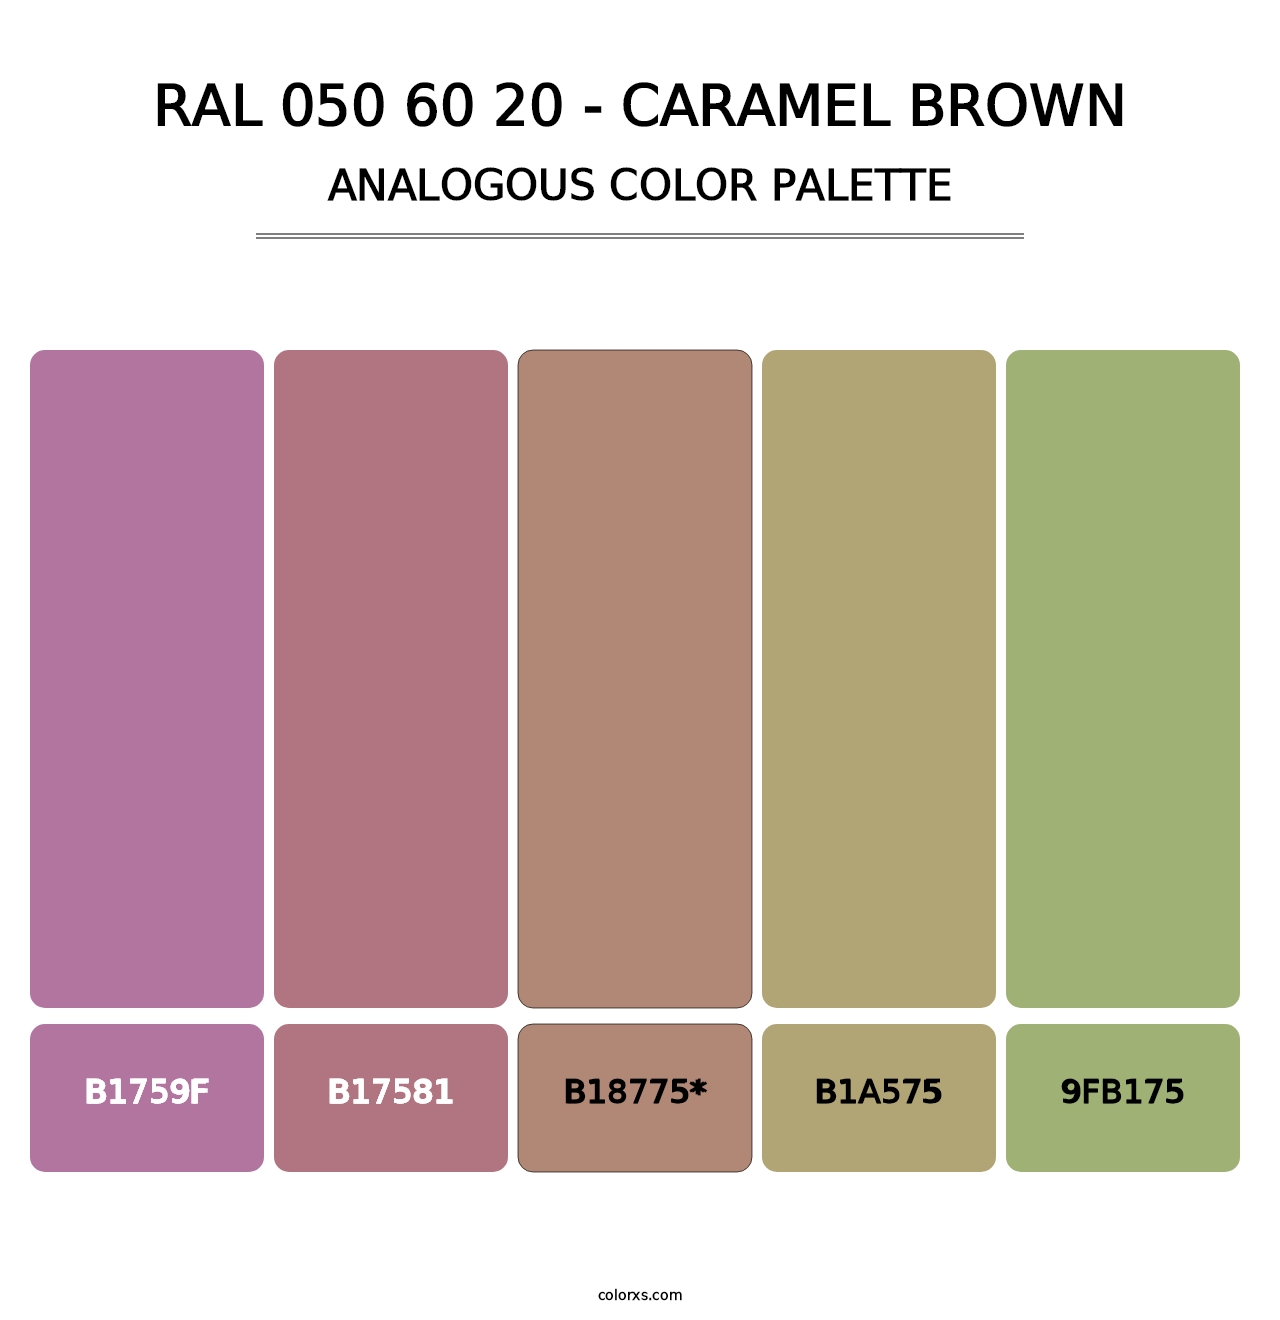 RAL 050 60 20 - Caramel Brown - Analogous Color Palette